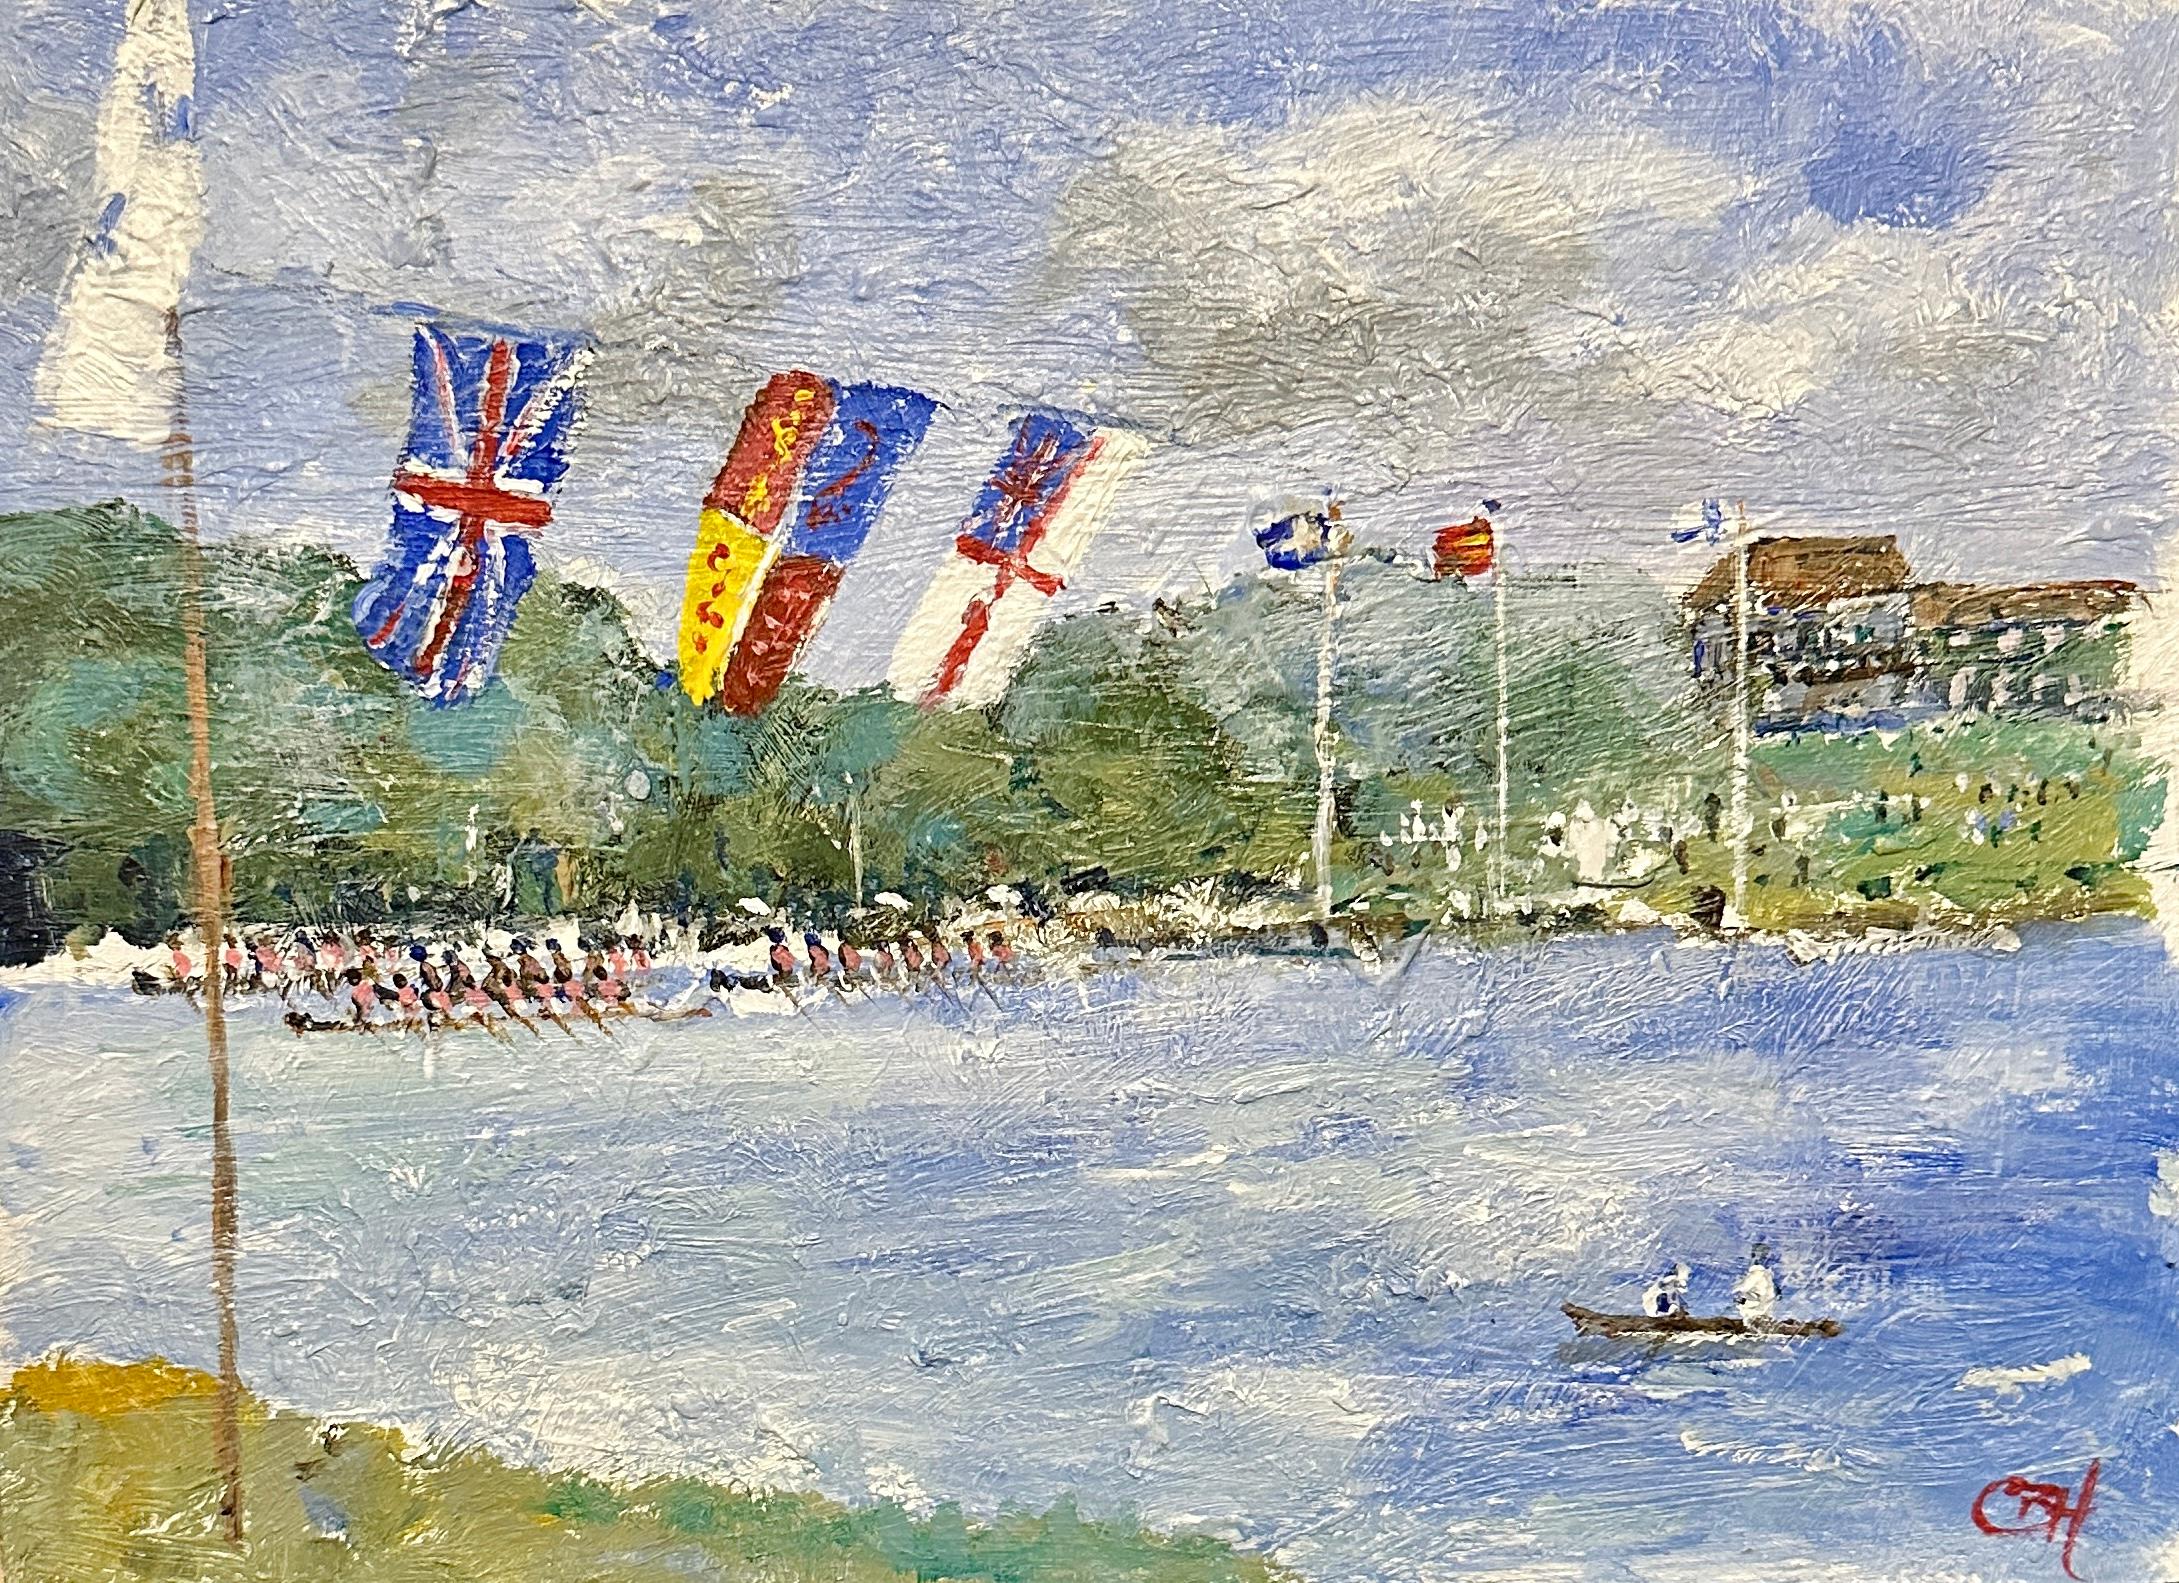 Charles Bertie Hall Landscape Painting - 20th century Modern British , Henley Regatta, Rowing scene on the Thames UK